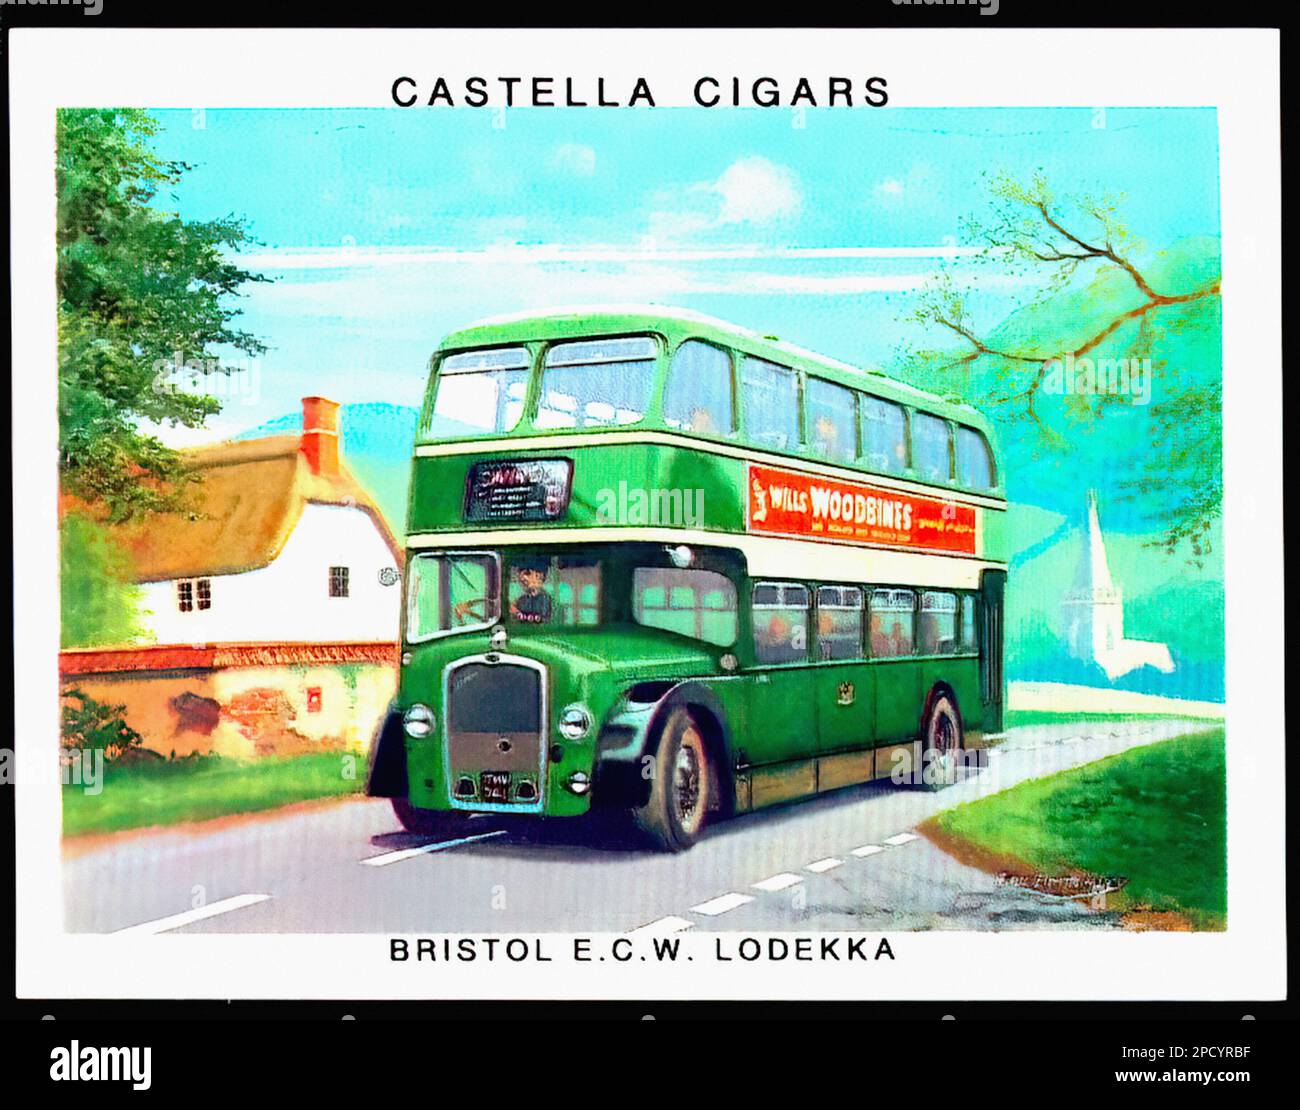 Bristol E.C.W. Lodekka Bus - Car Vintage Cigar Card Stock Photo